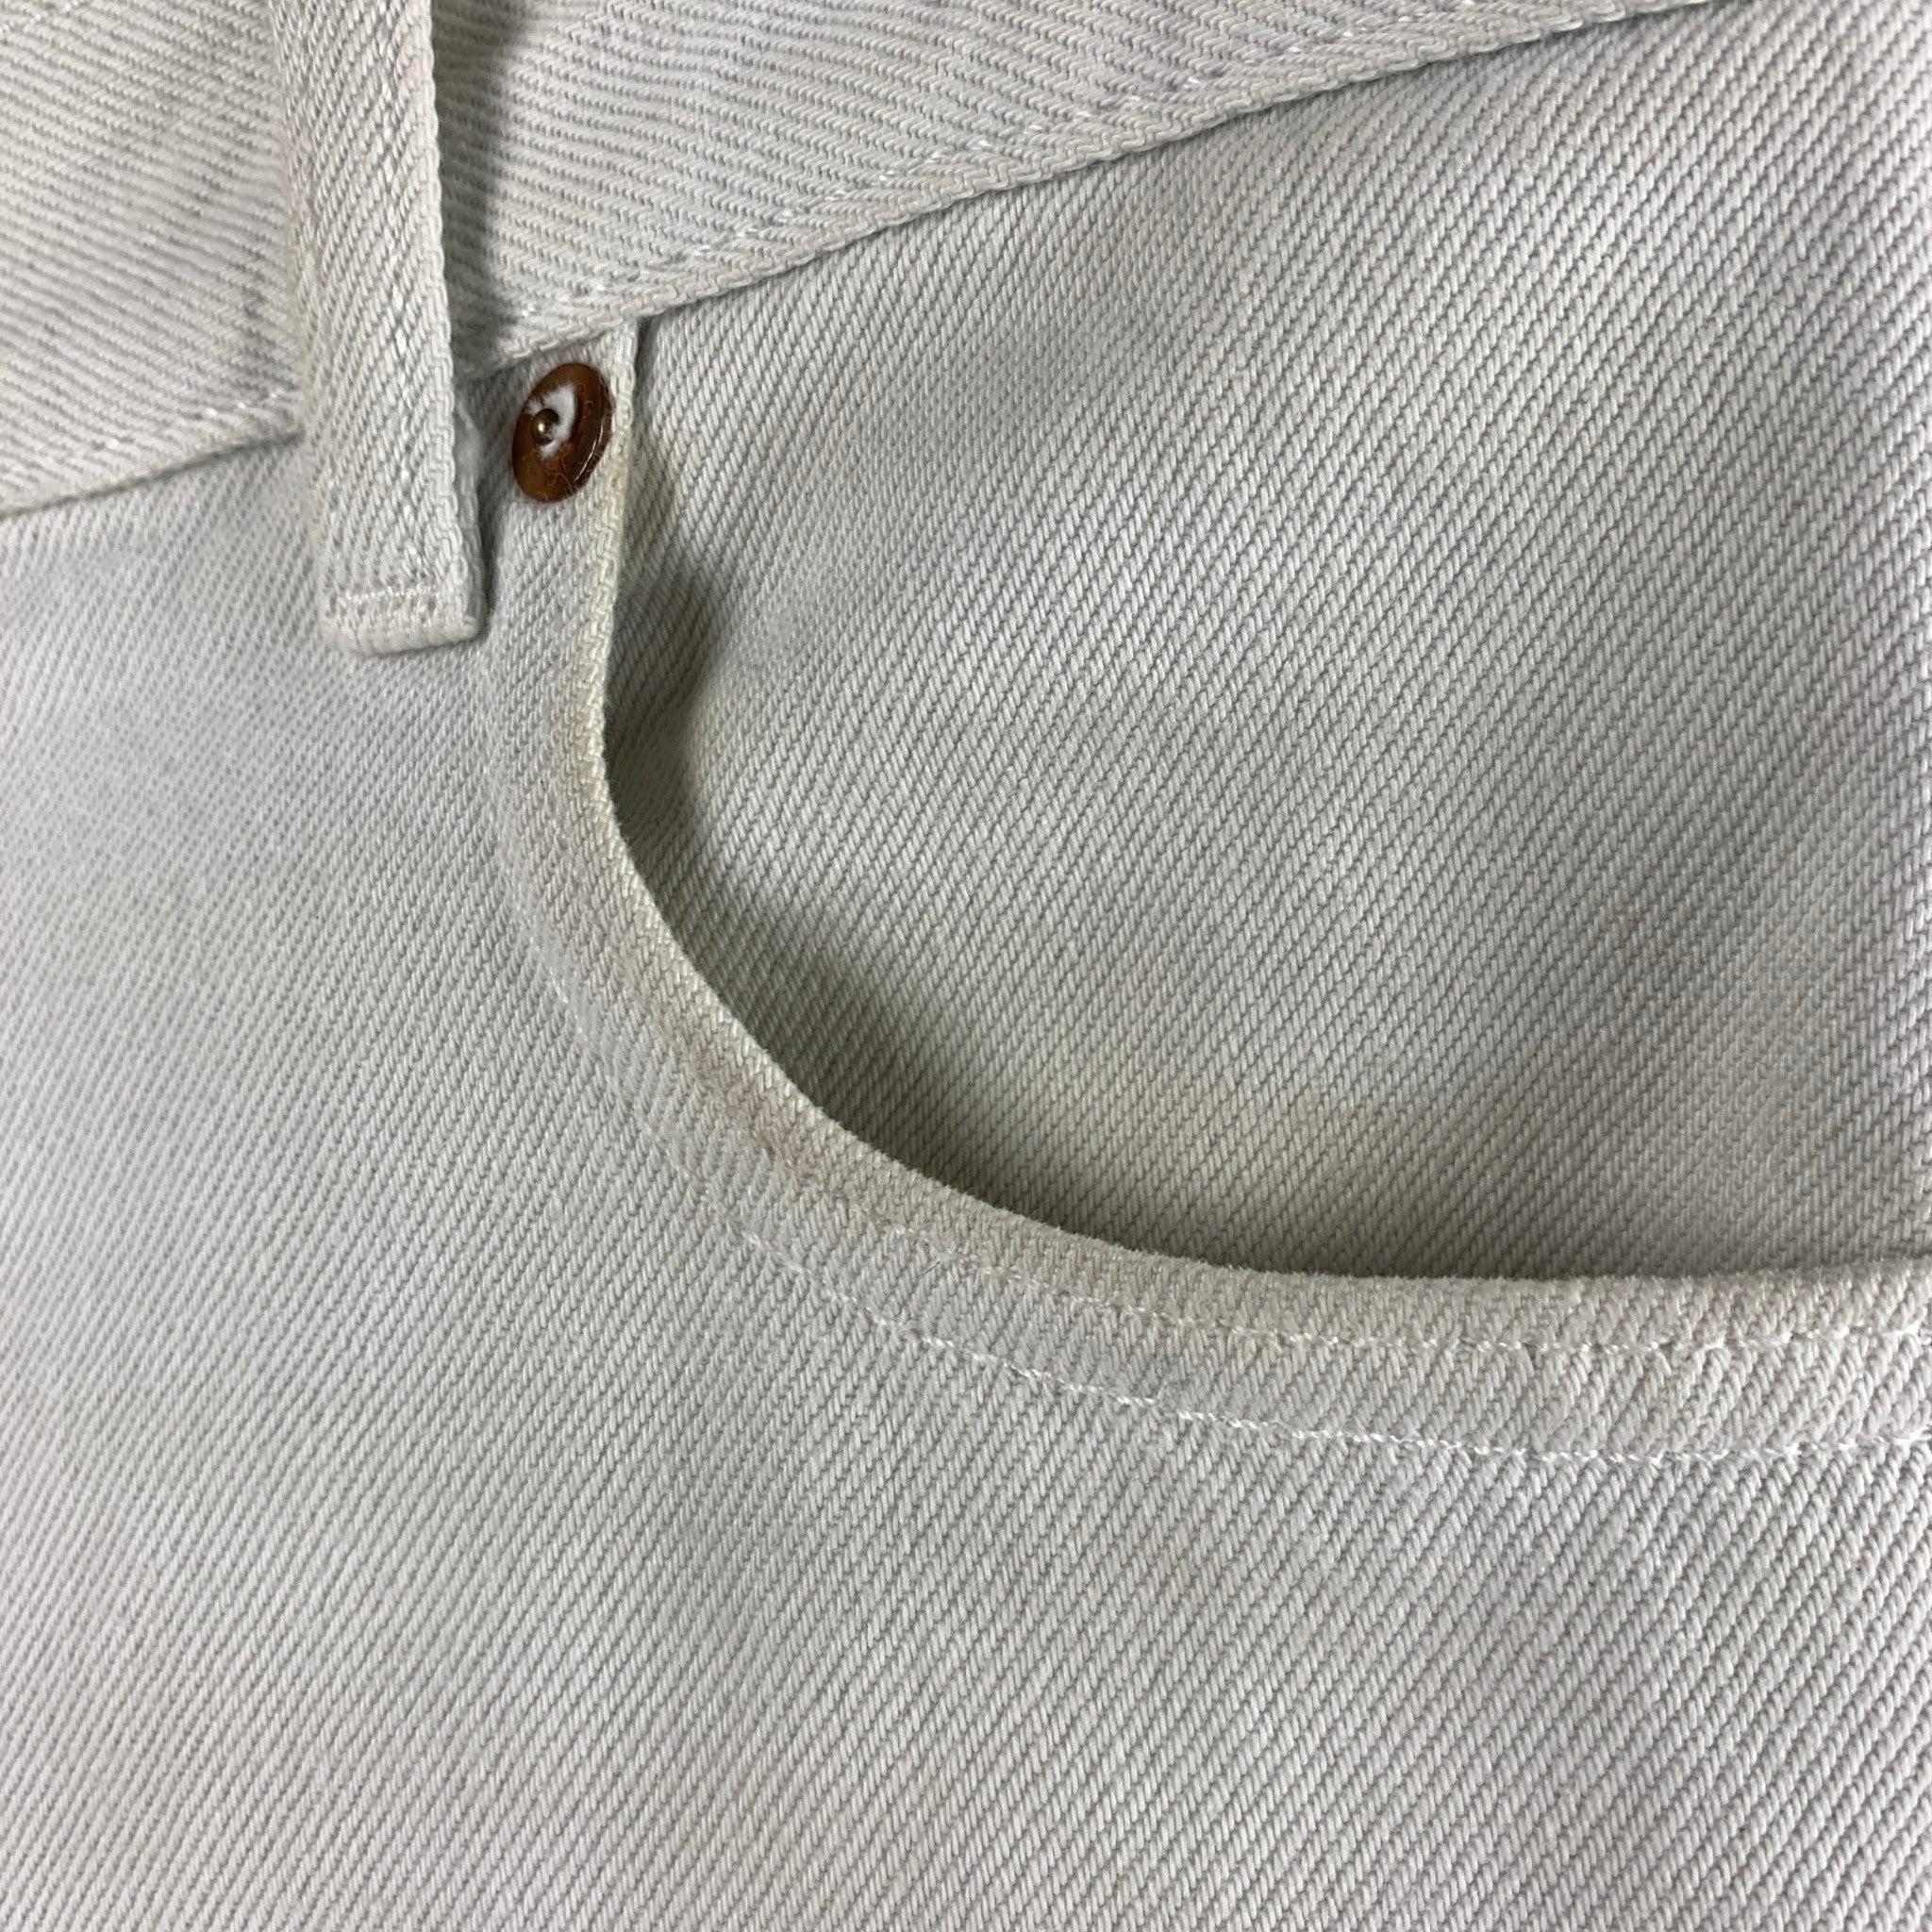 VETEMENTS Size 32 White Light Blue Cotton Button Fly Jeans For Sale 3